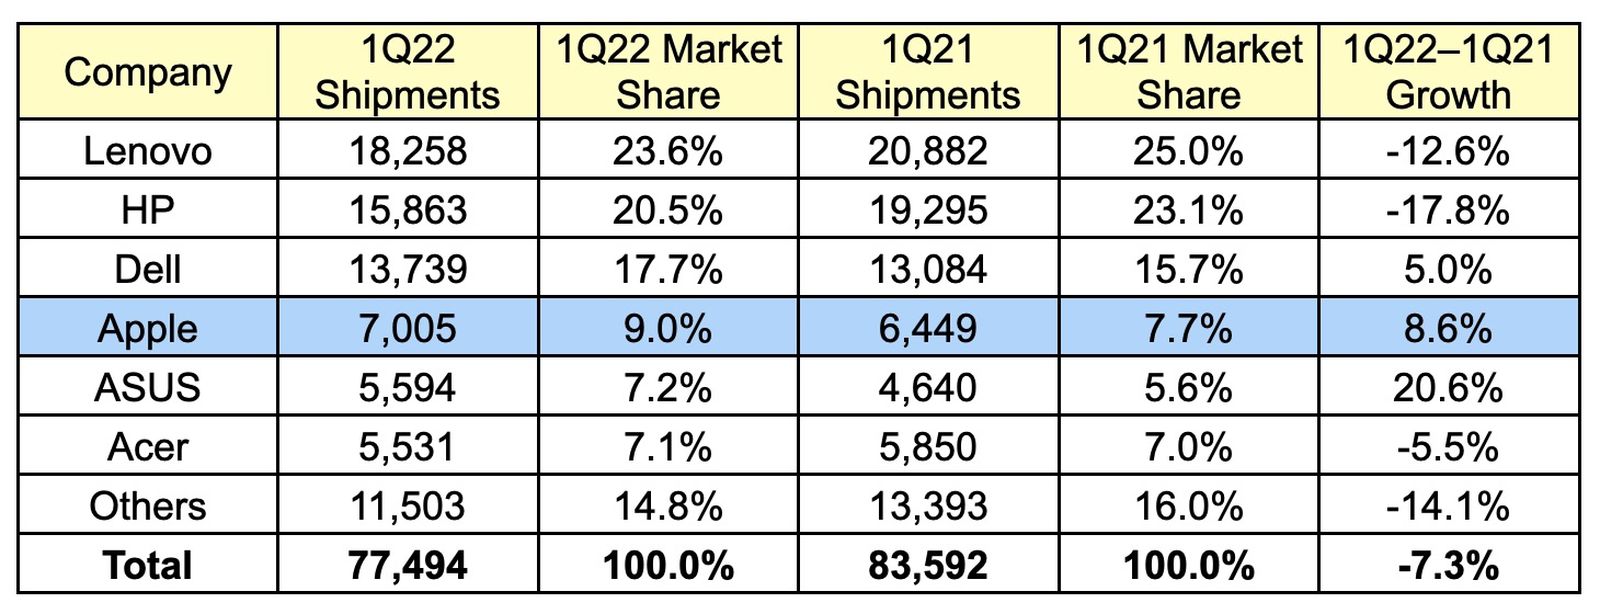 Mac Shipments Up in Q1 2022 Amid Worldwide PC Shipment Decline